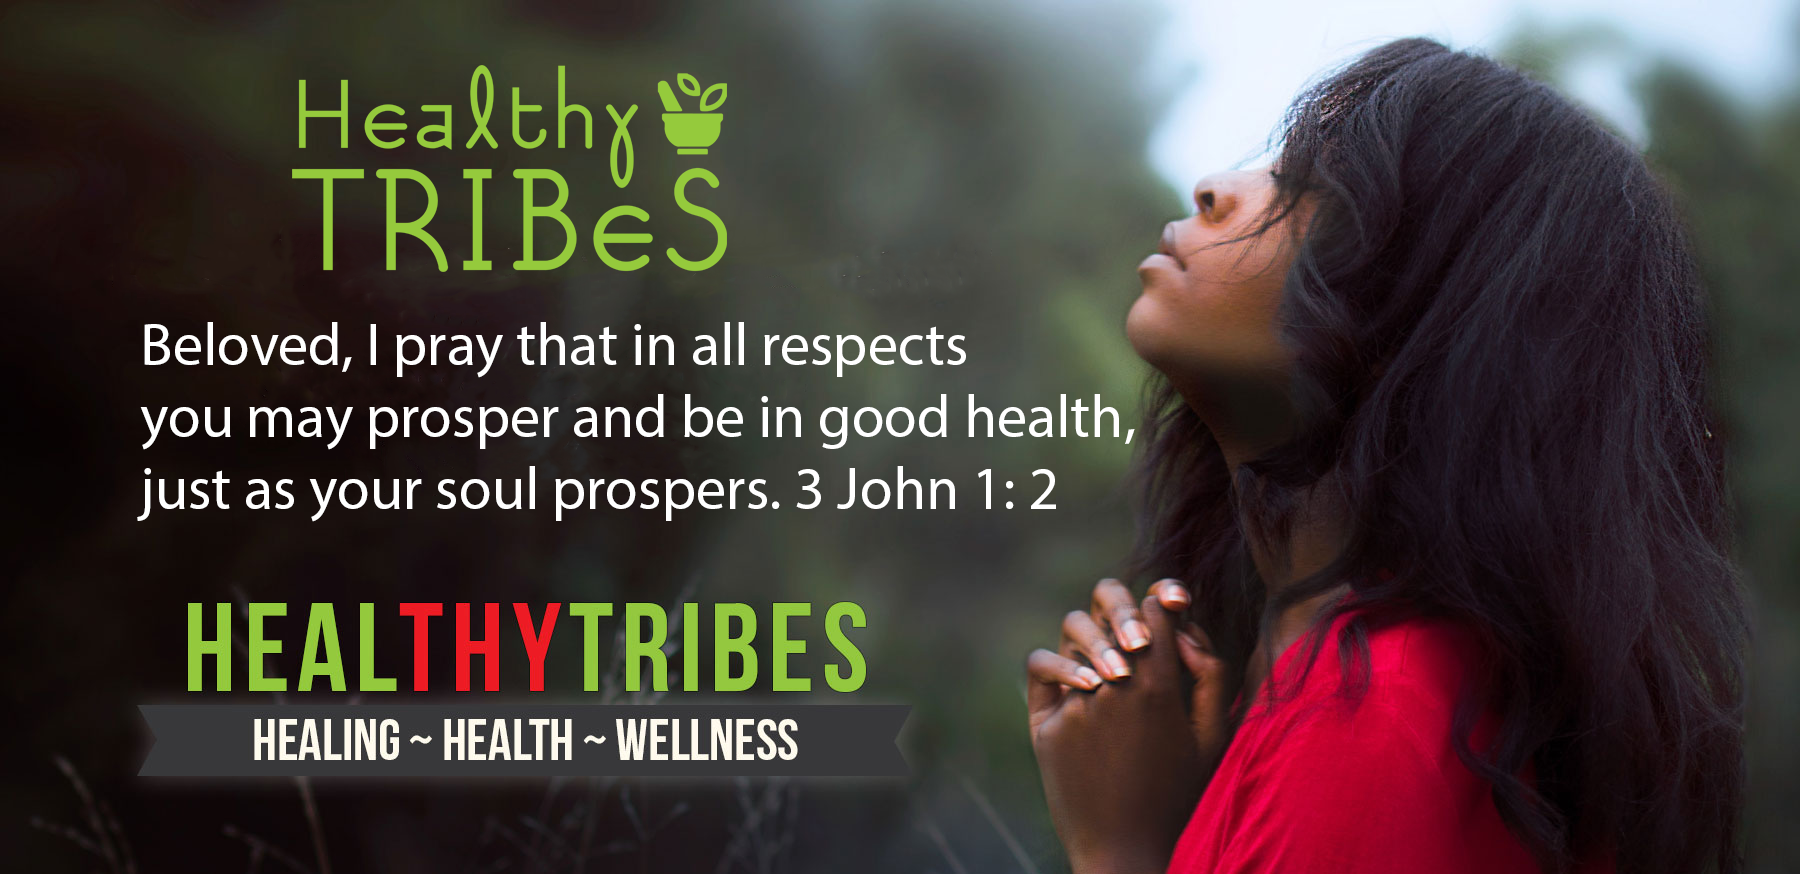 Healthy Tribes Healing Prayer Call